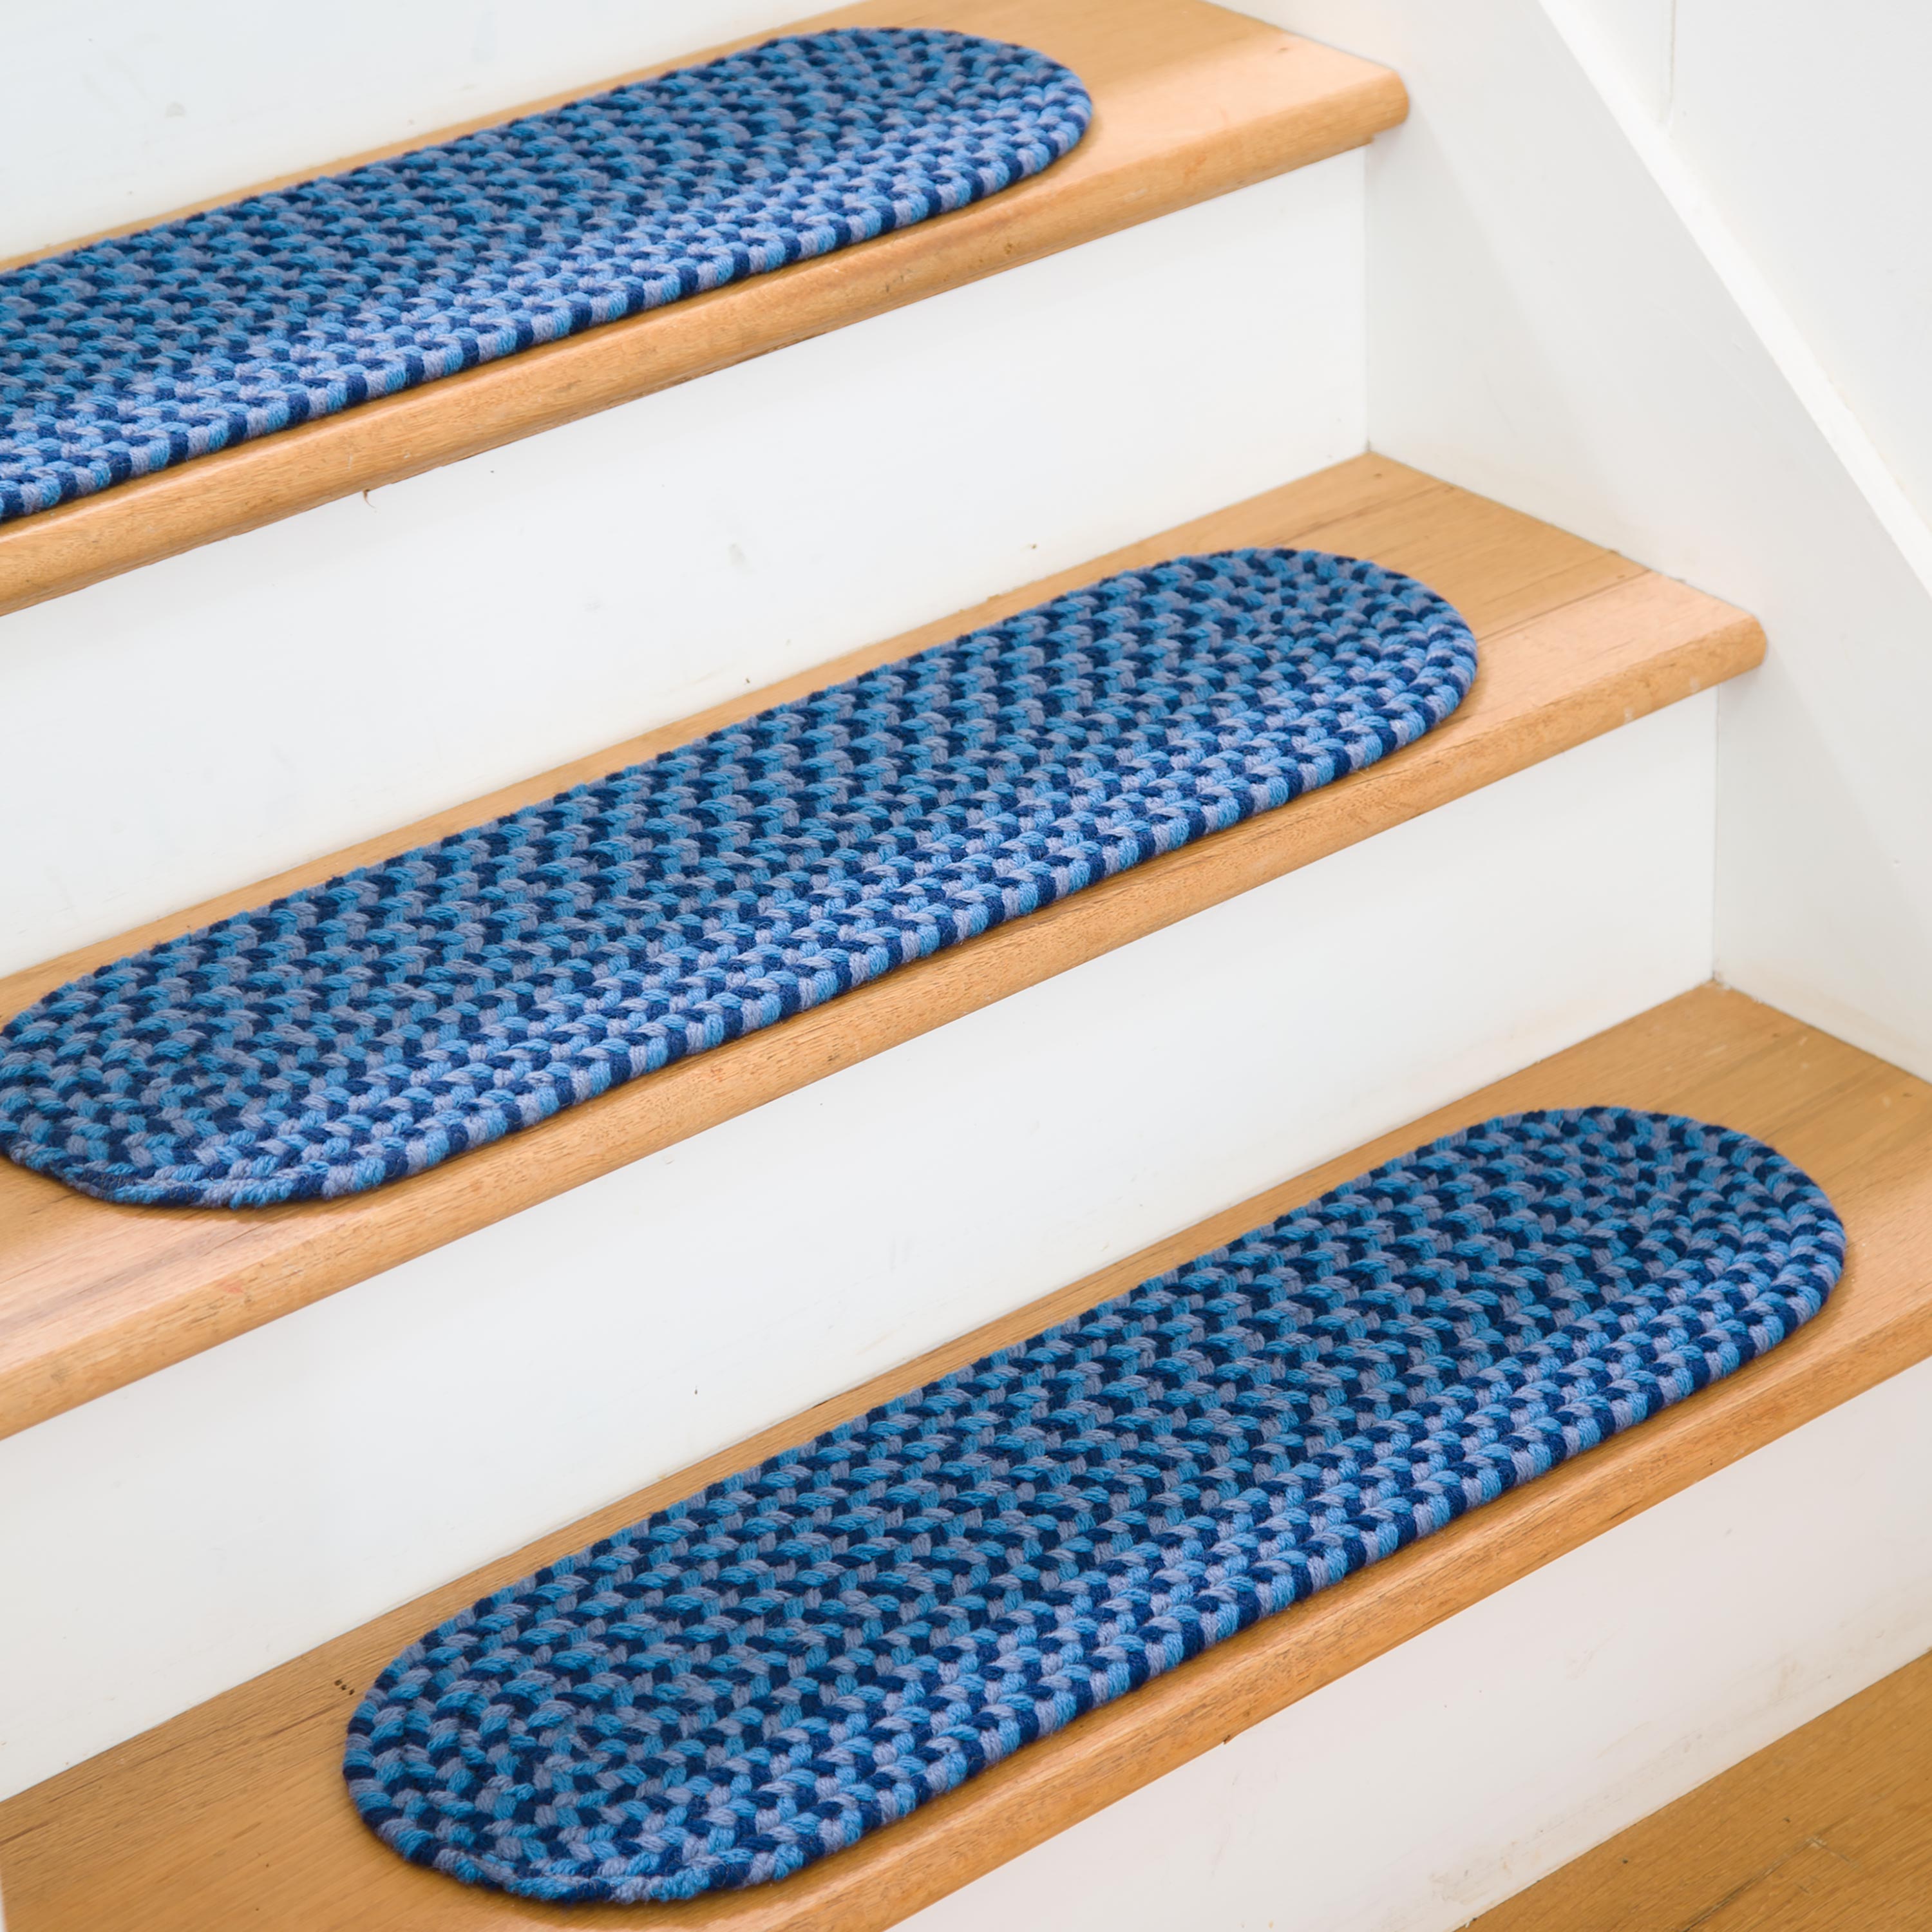 USA-Made Wool Braided Virginia Stair Tread, 8" x 28"